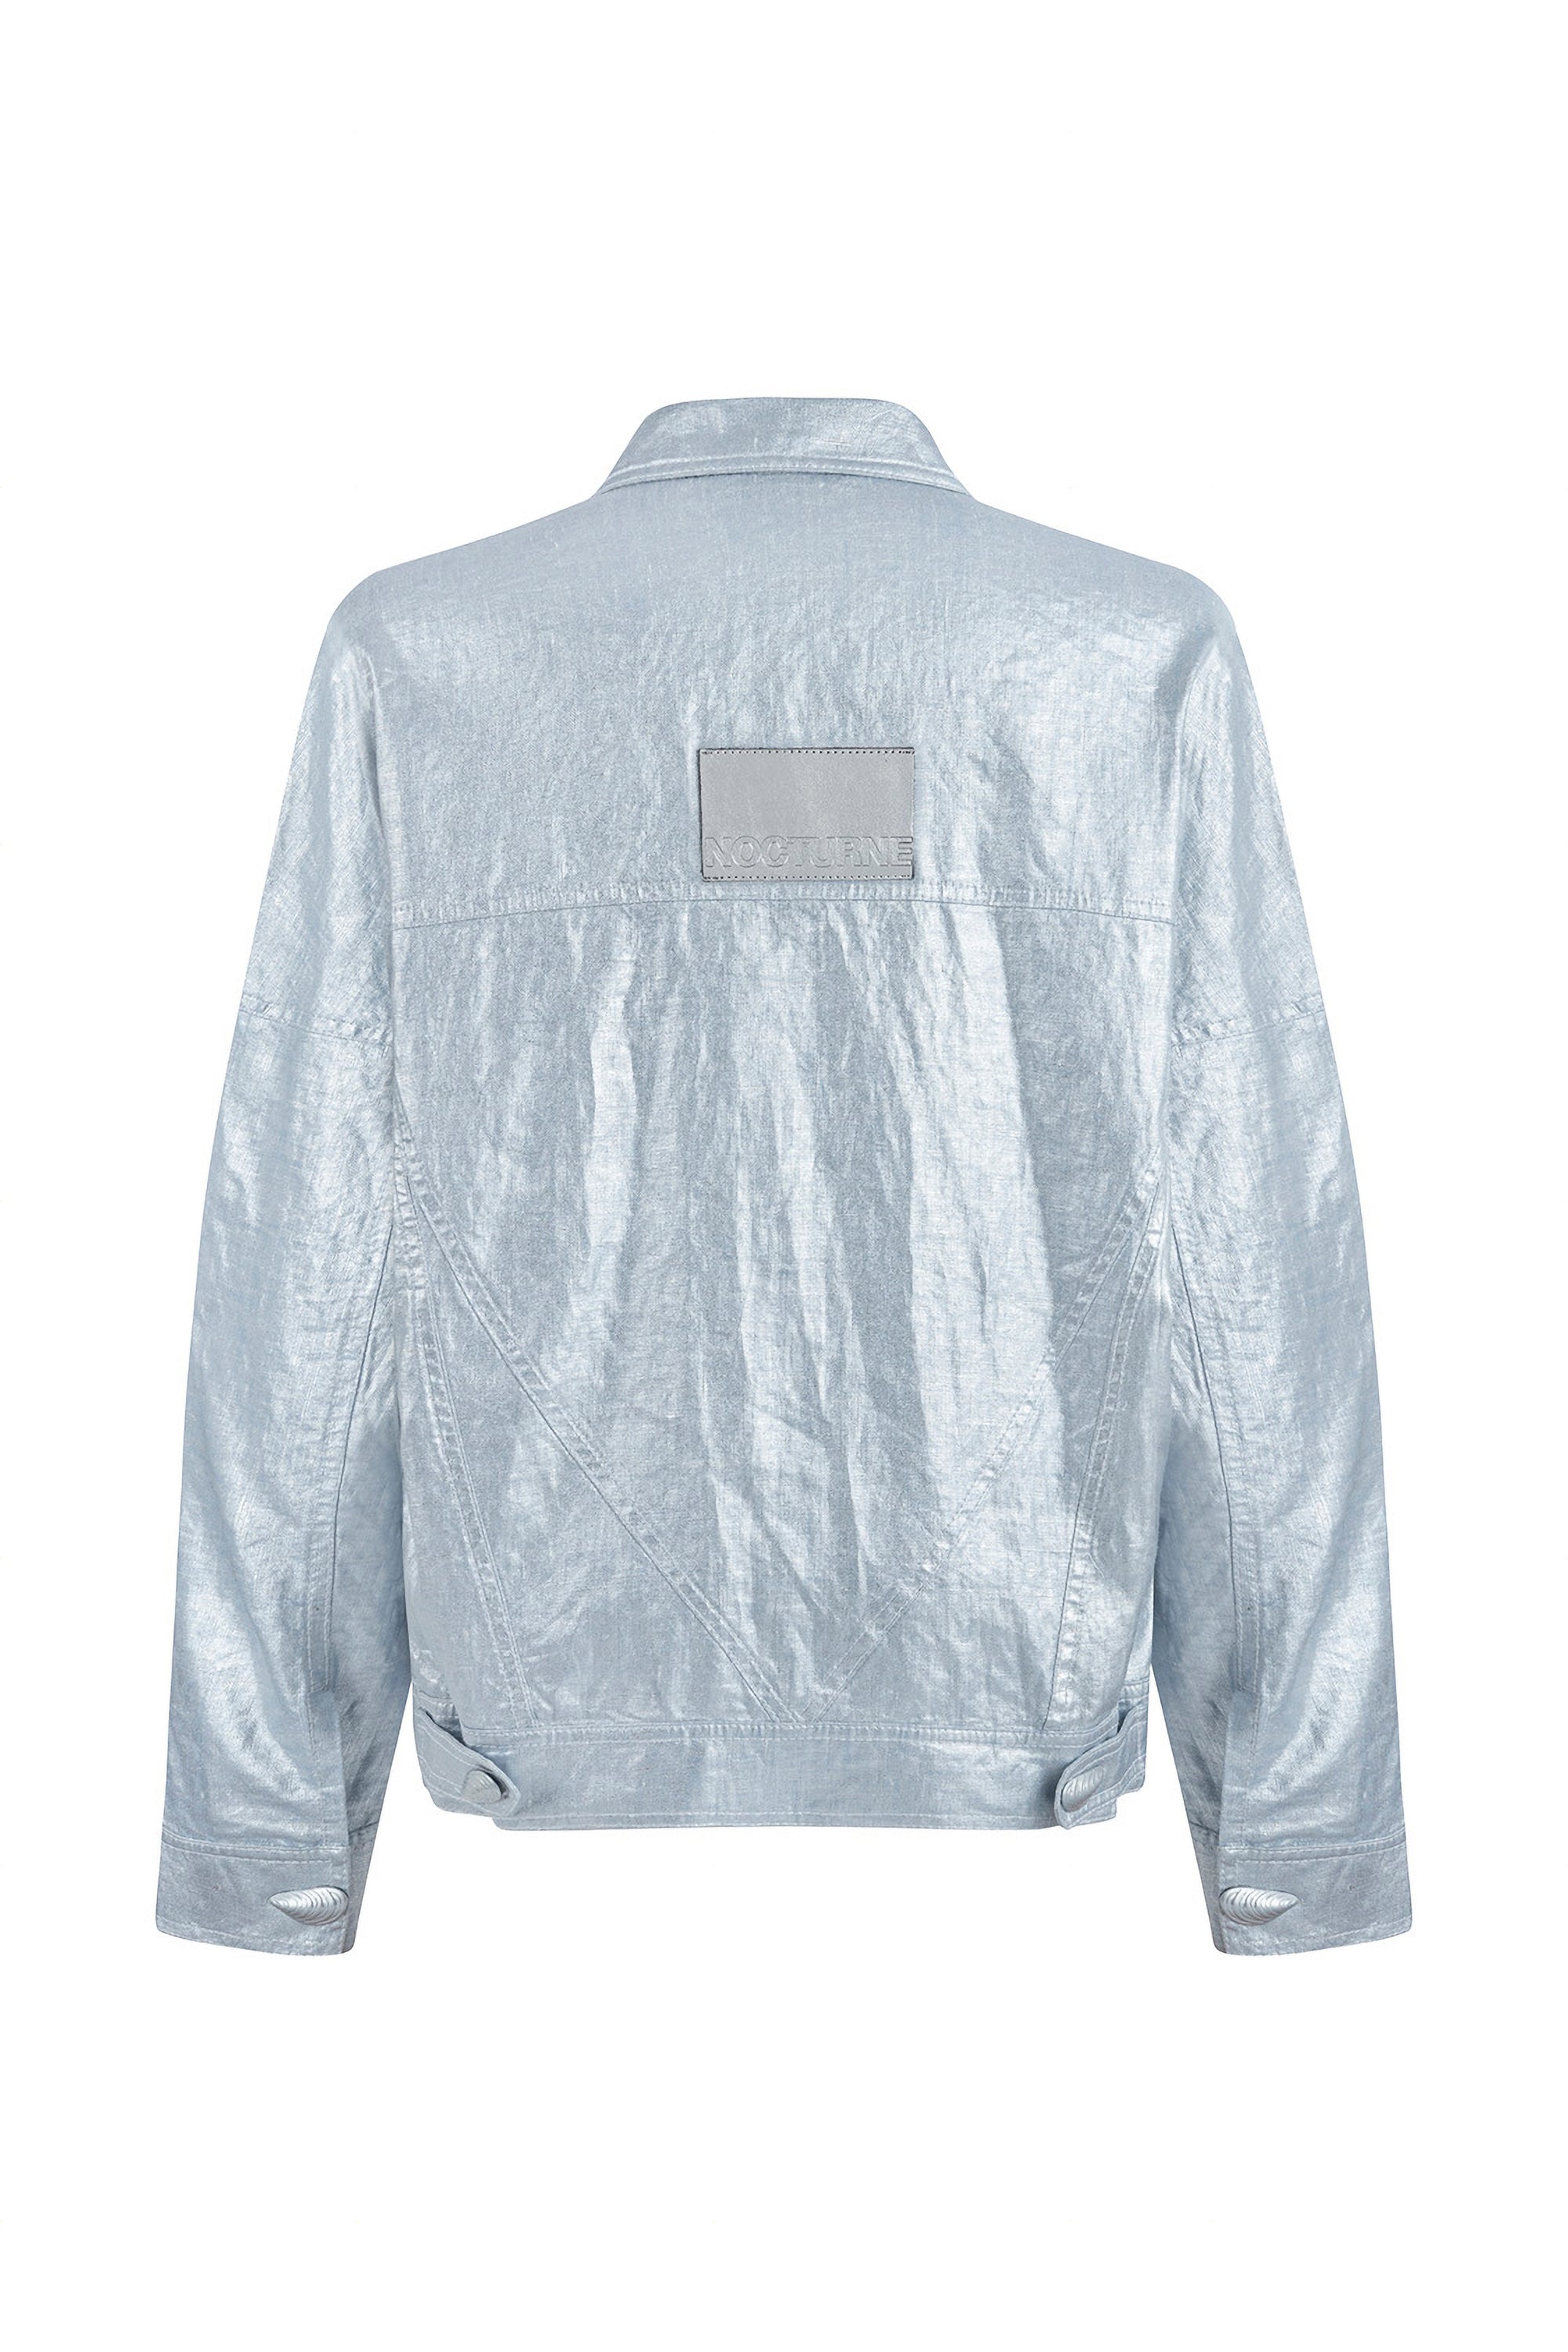 Metallic Shell Detailed Jacket